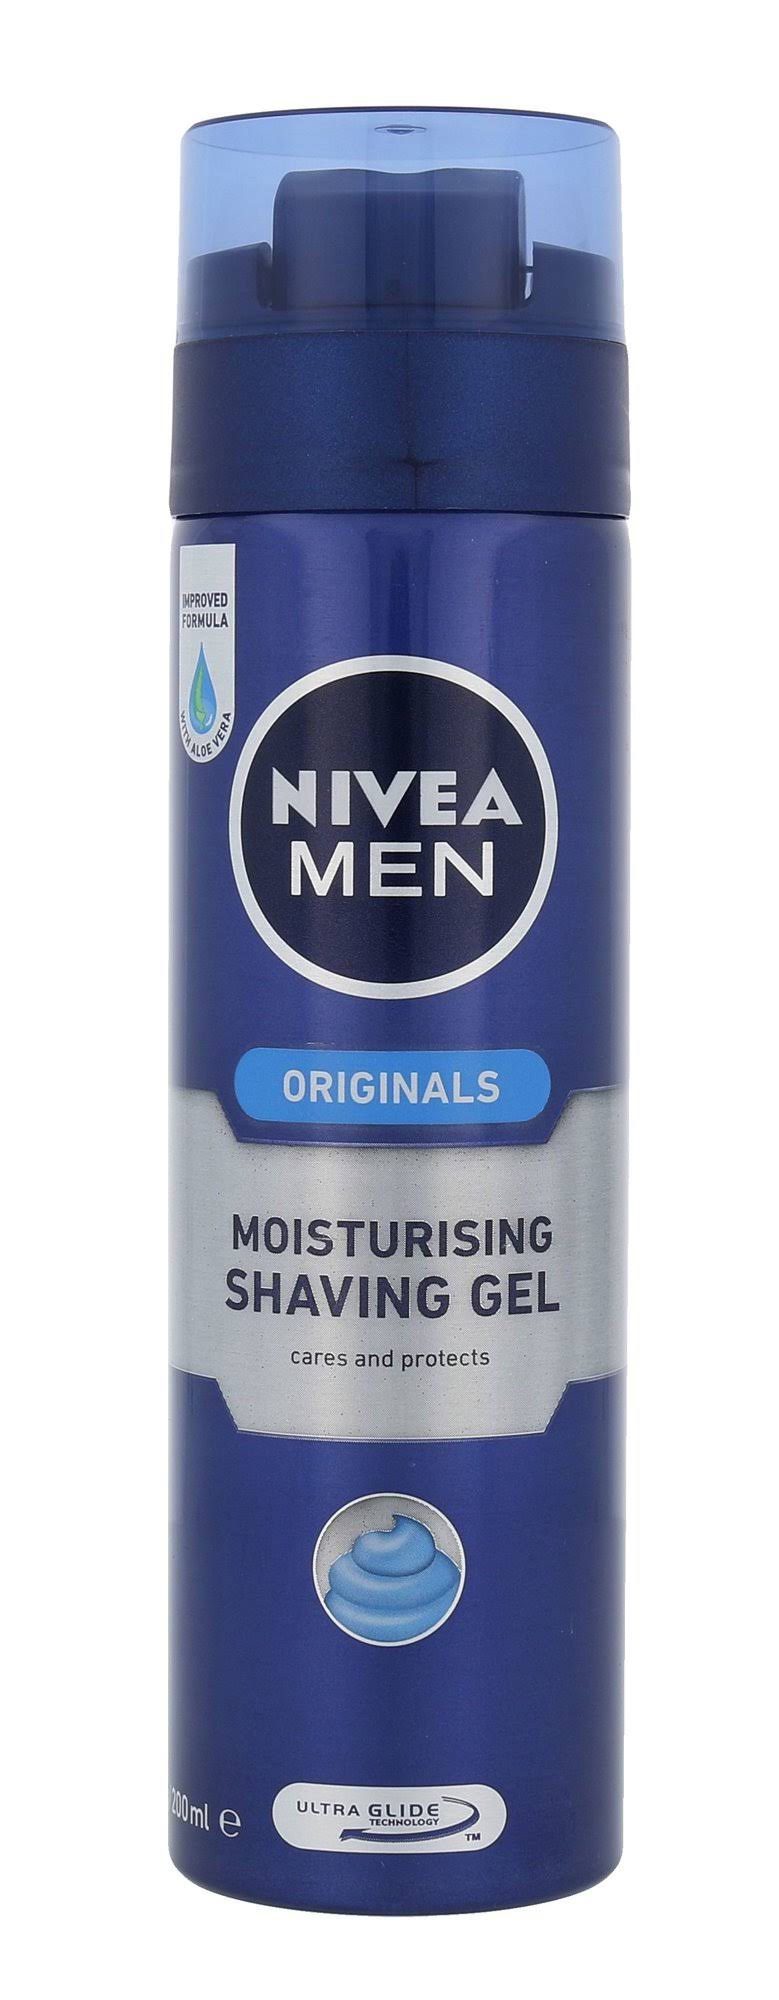 Nivea Men Protect and Care Moisturising Shaving Gel - 200ml